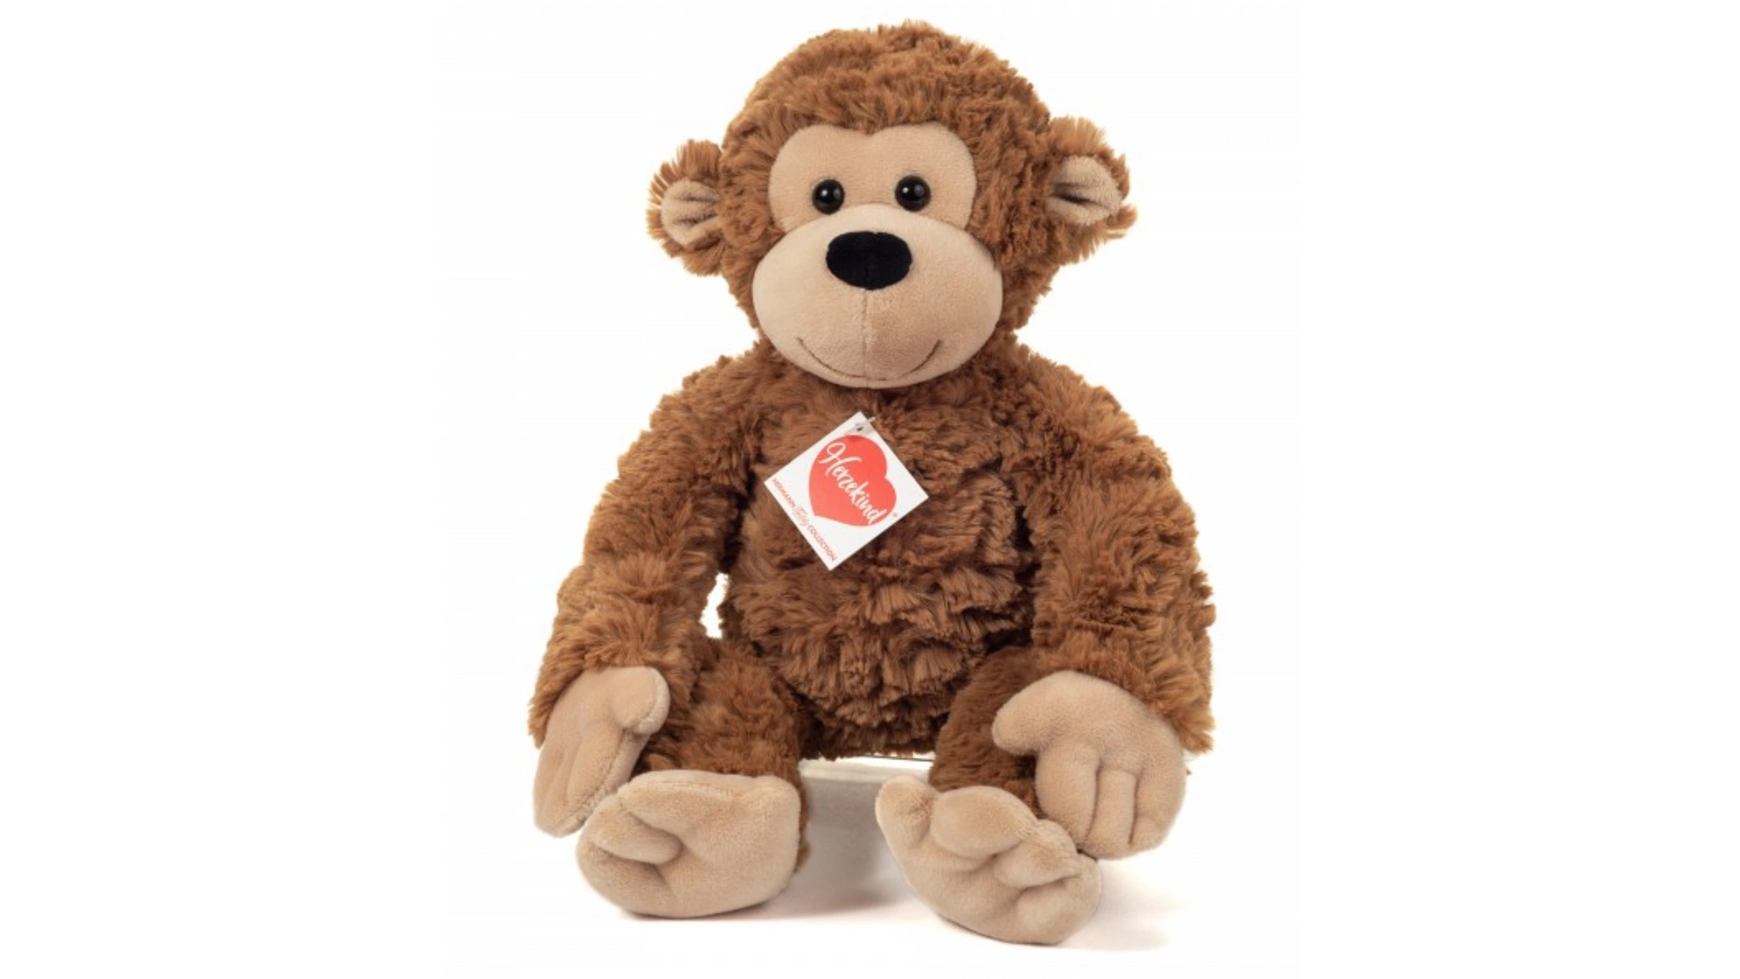 Мягкая игрушка обезьянка рикки 32 см Teddy-Hermann мягкая игрушка обезьянка 26 см